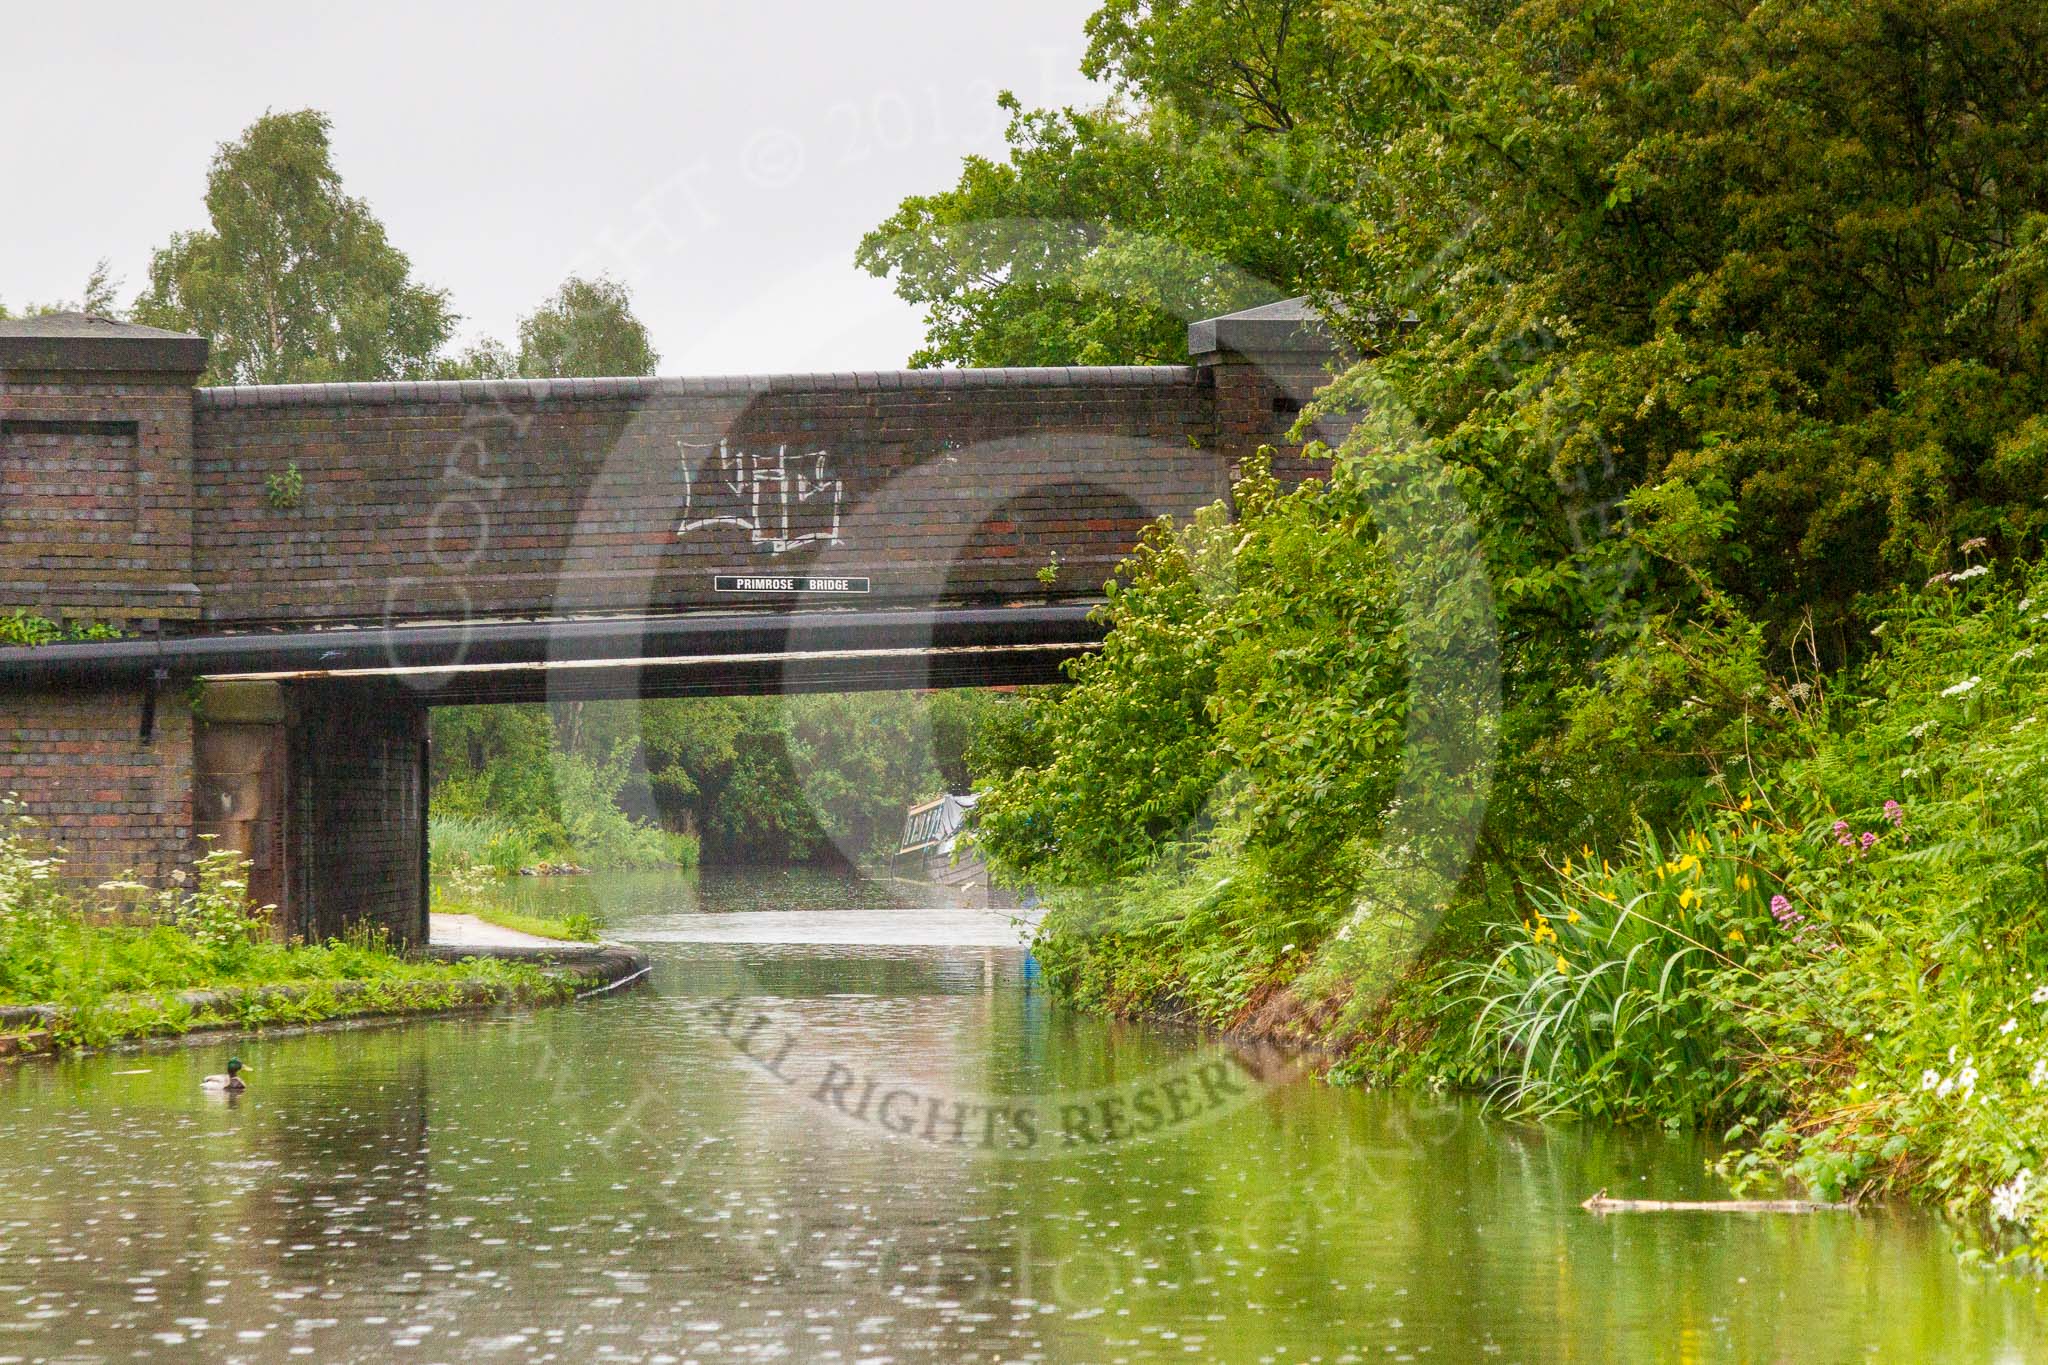 BCN Marathon Challenge 2014: Primrose Bridge on the Dudley No 1 Canal.
Birmingham Canal Navigation,


United Kingdom,
on 25 May 2014 at 06:53, image #209